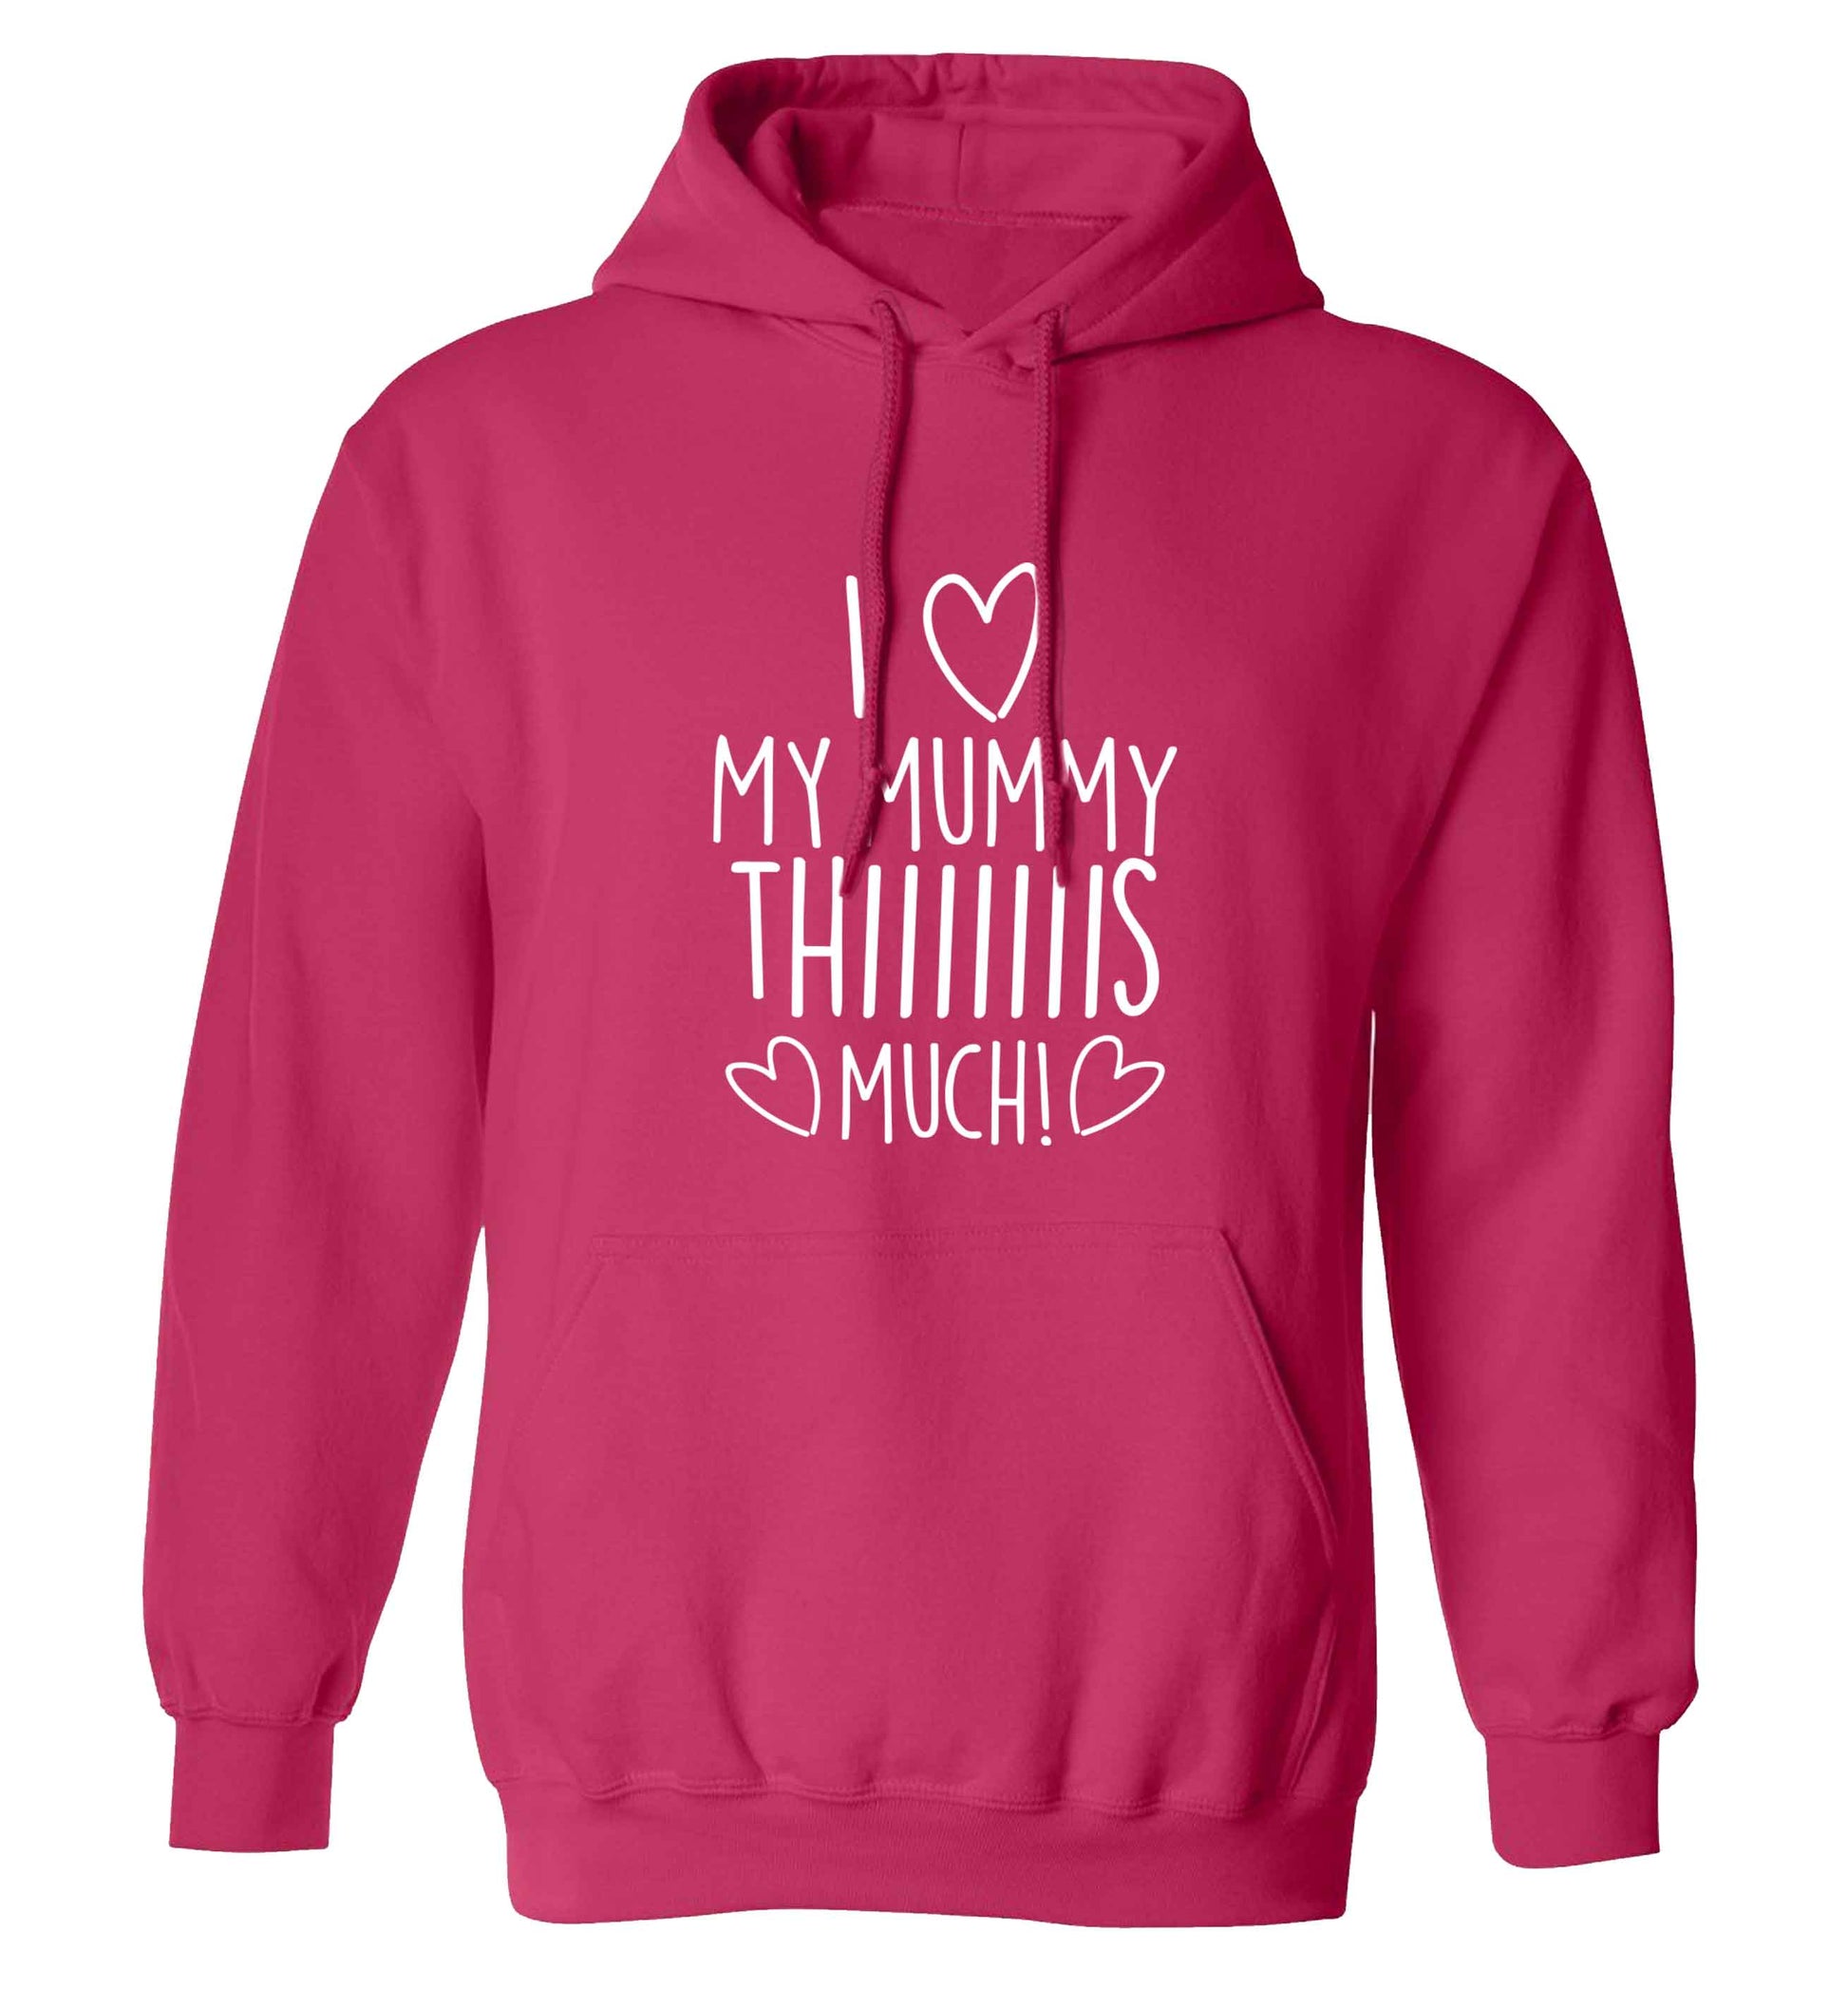 I love my mummy thiiiiis much! adults unisex pink hoodie 2XL